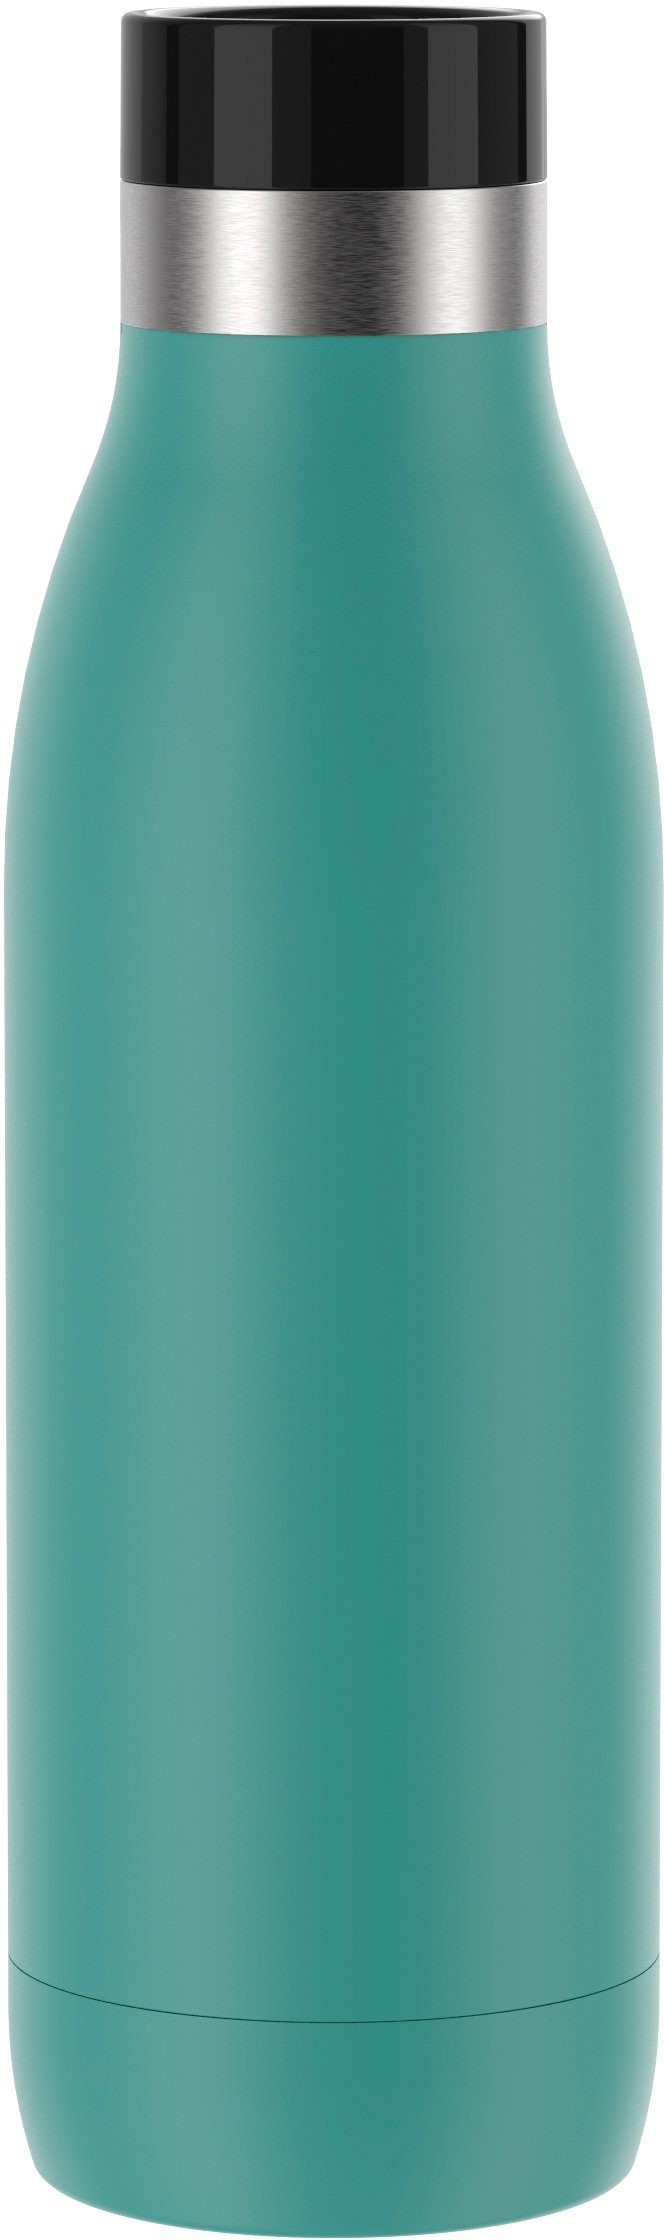 Emsa Trinkflasche Bludrop Color, Edelstahl, Quick-Press Deckel, 12h warm/24h kühl, spülmaschinenfest